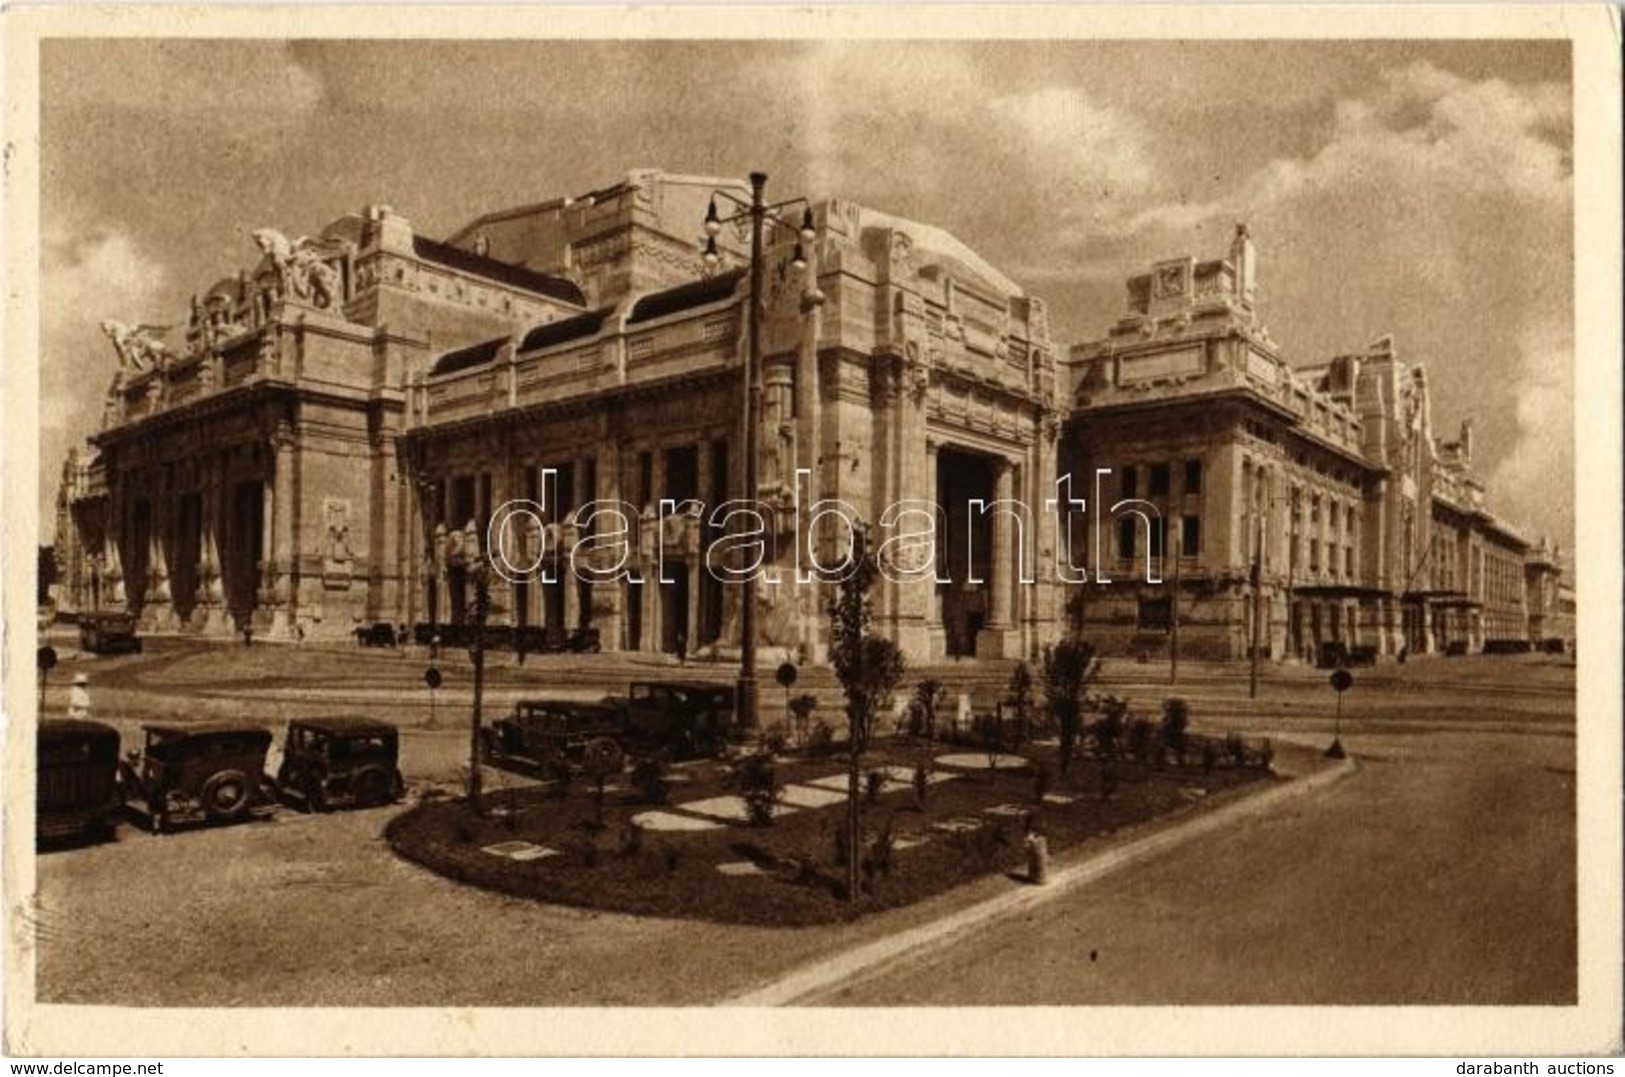 Milan, Milano; Stazione / Railway Station - 2 Pre-1945 Postcards - Non Classés